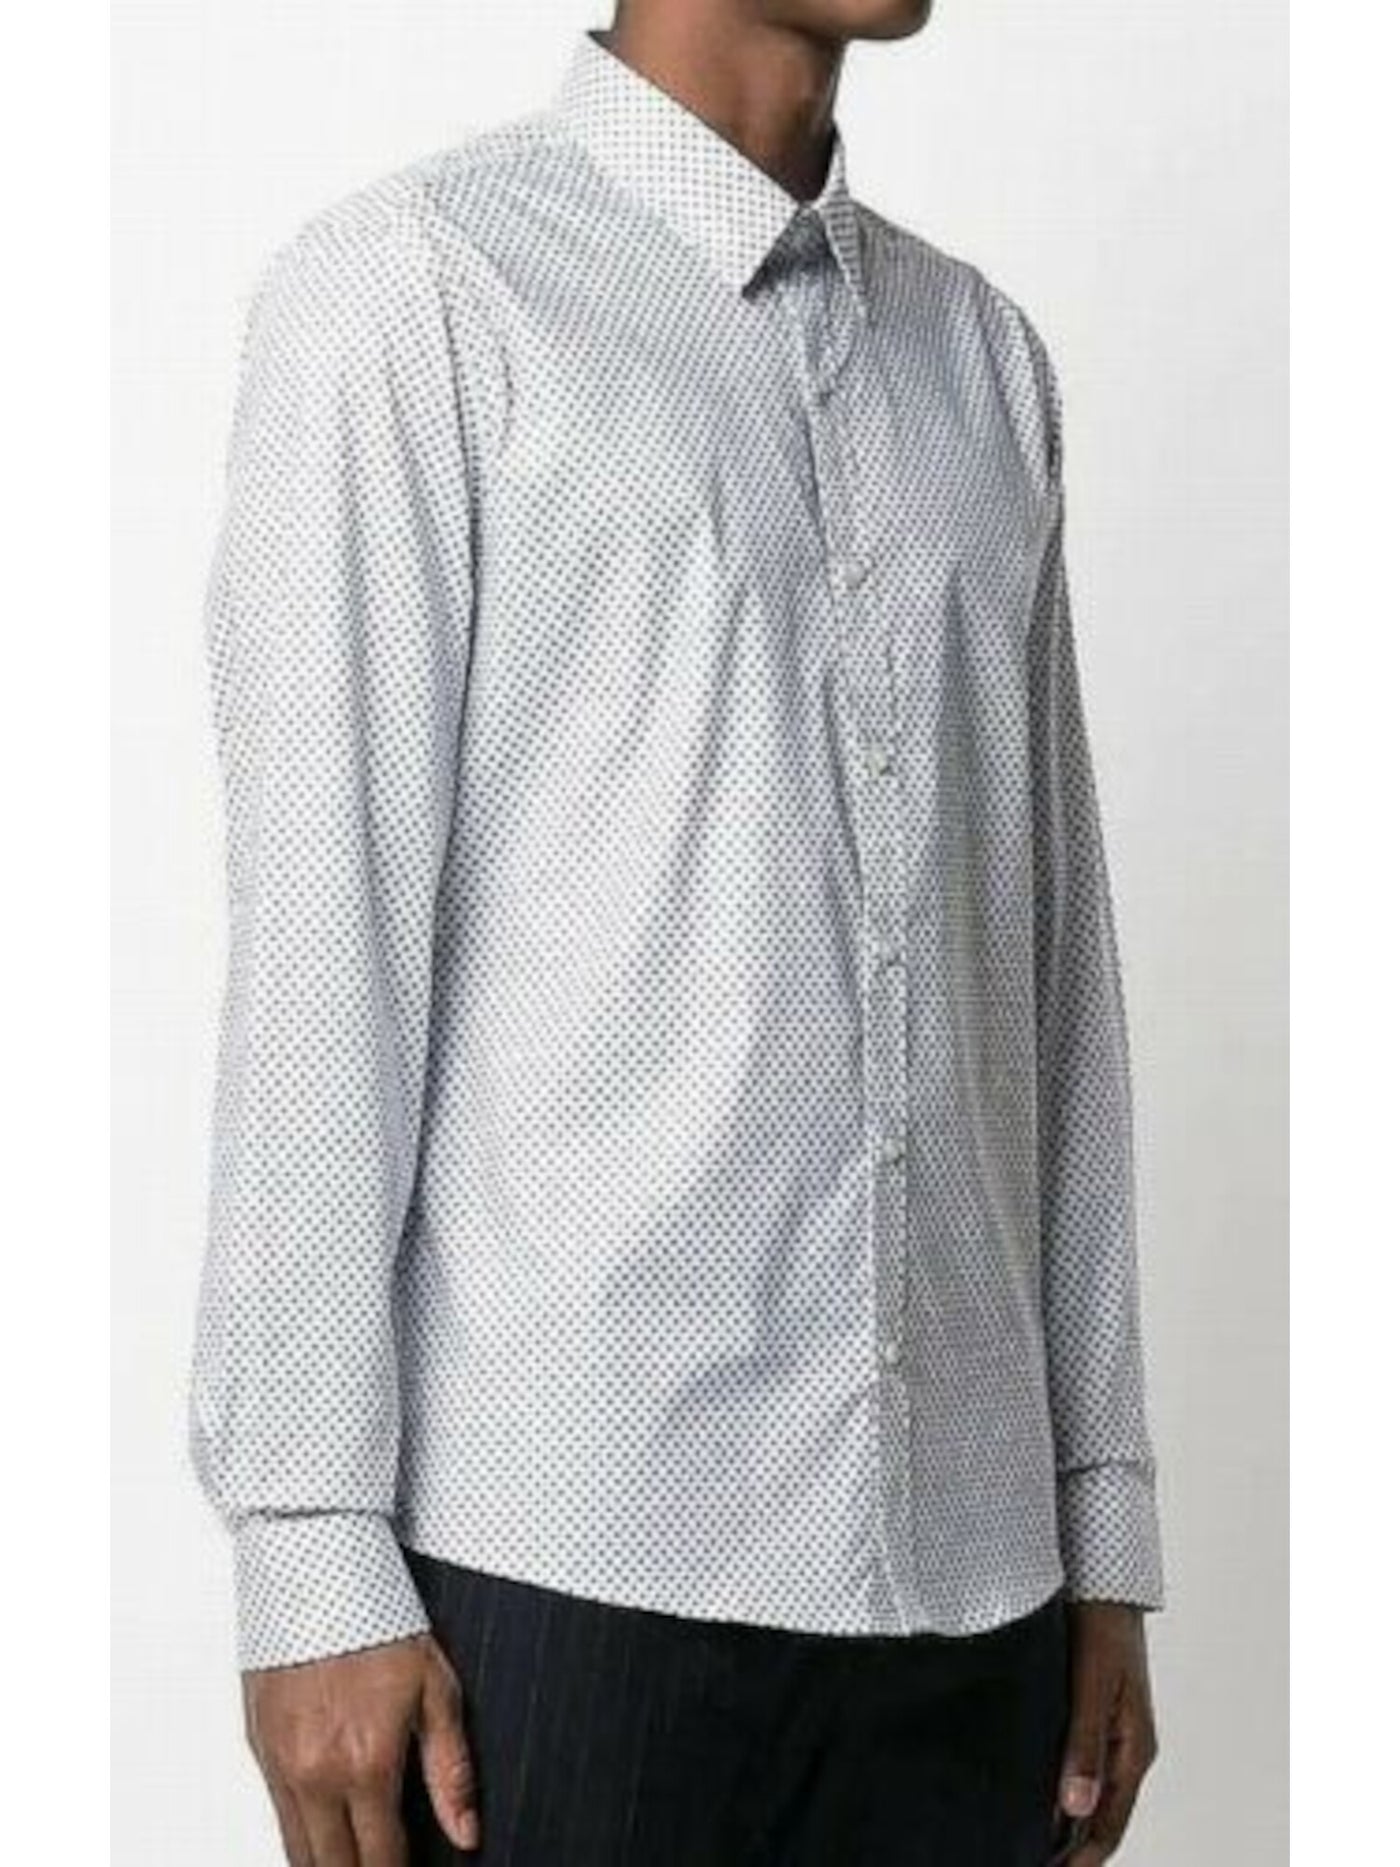 MICHAEL KORS Mens White Printed Button Down Casual Shirt XL